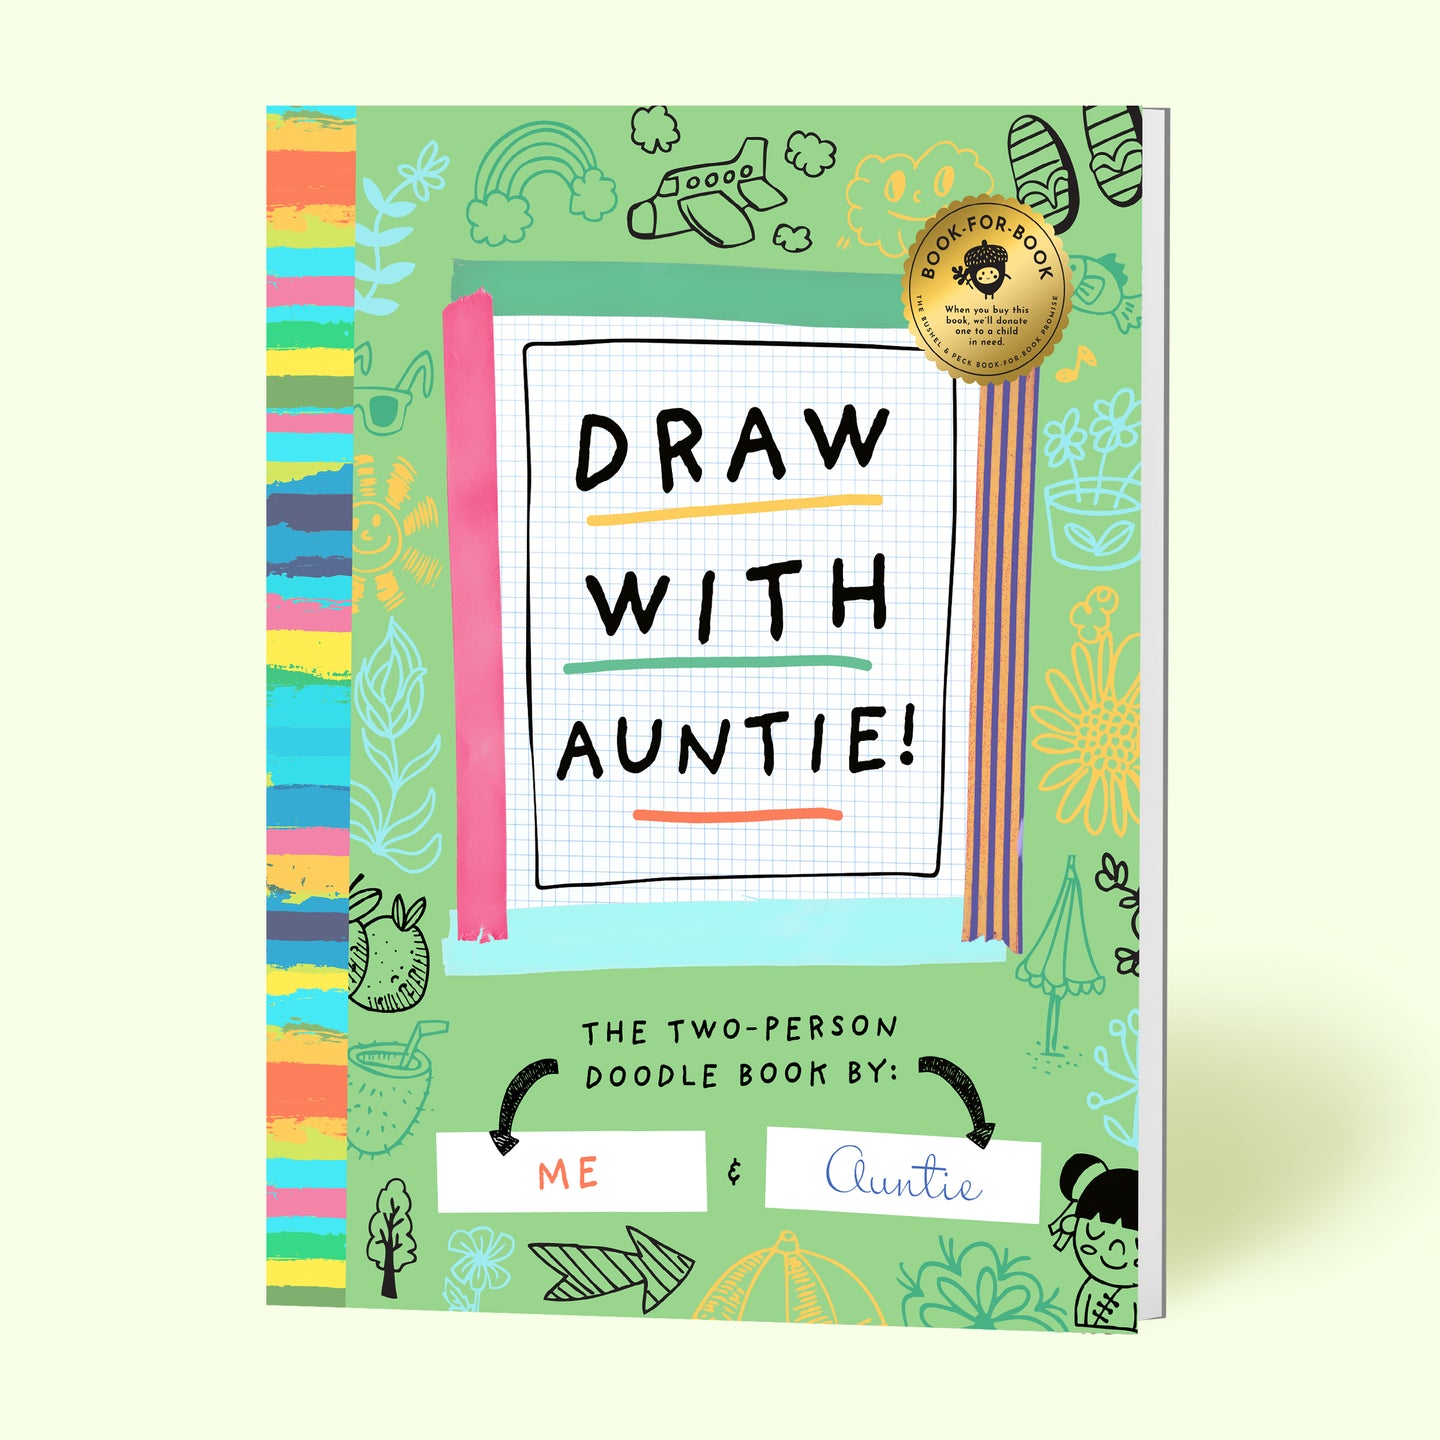 Draw with Auntie!